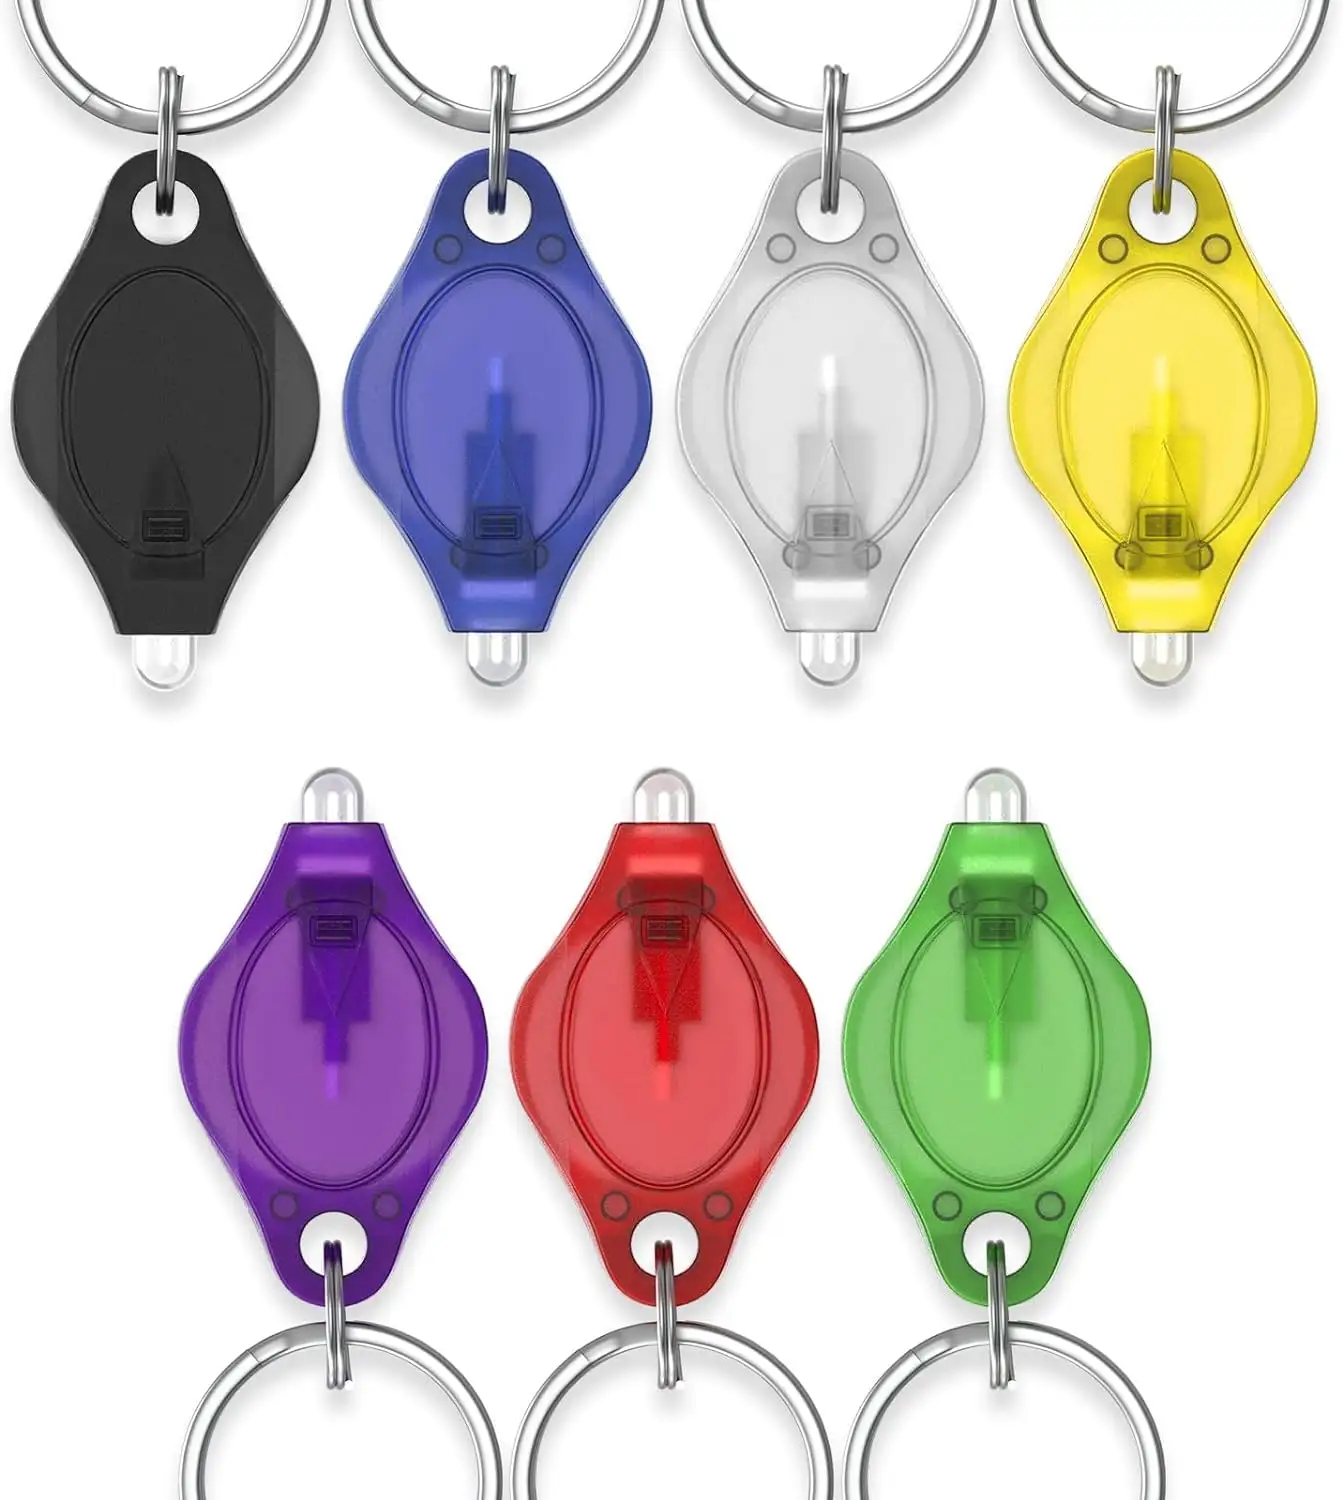 LED Keychain Flashlight Mini LED Keychain Light 12 Lumen Portable Ultra Bright Battery Powered Key Ring Torch